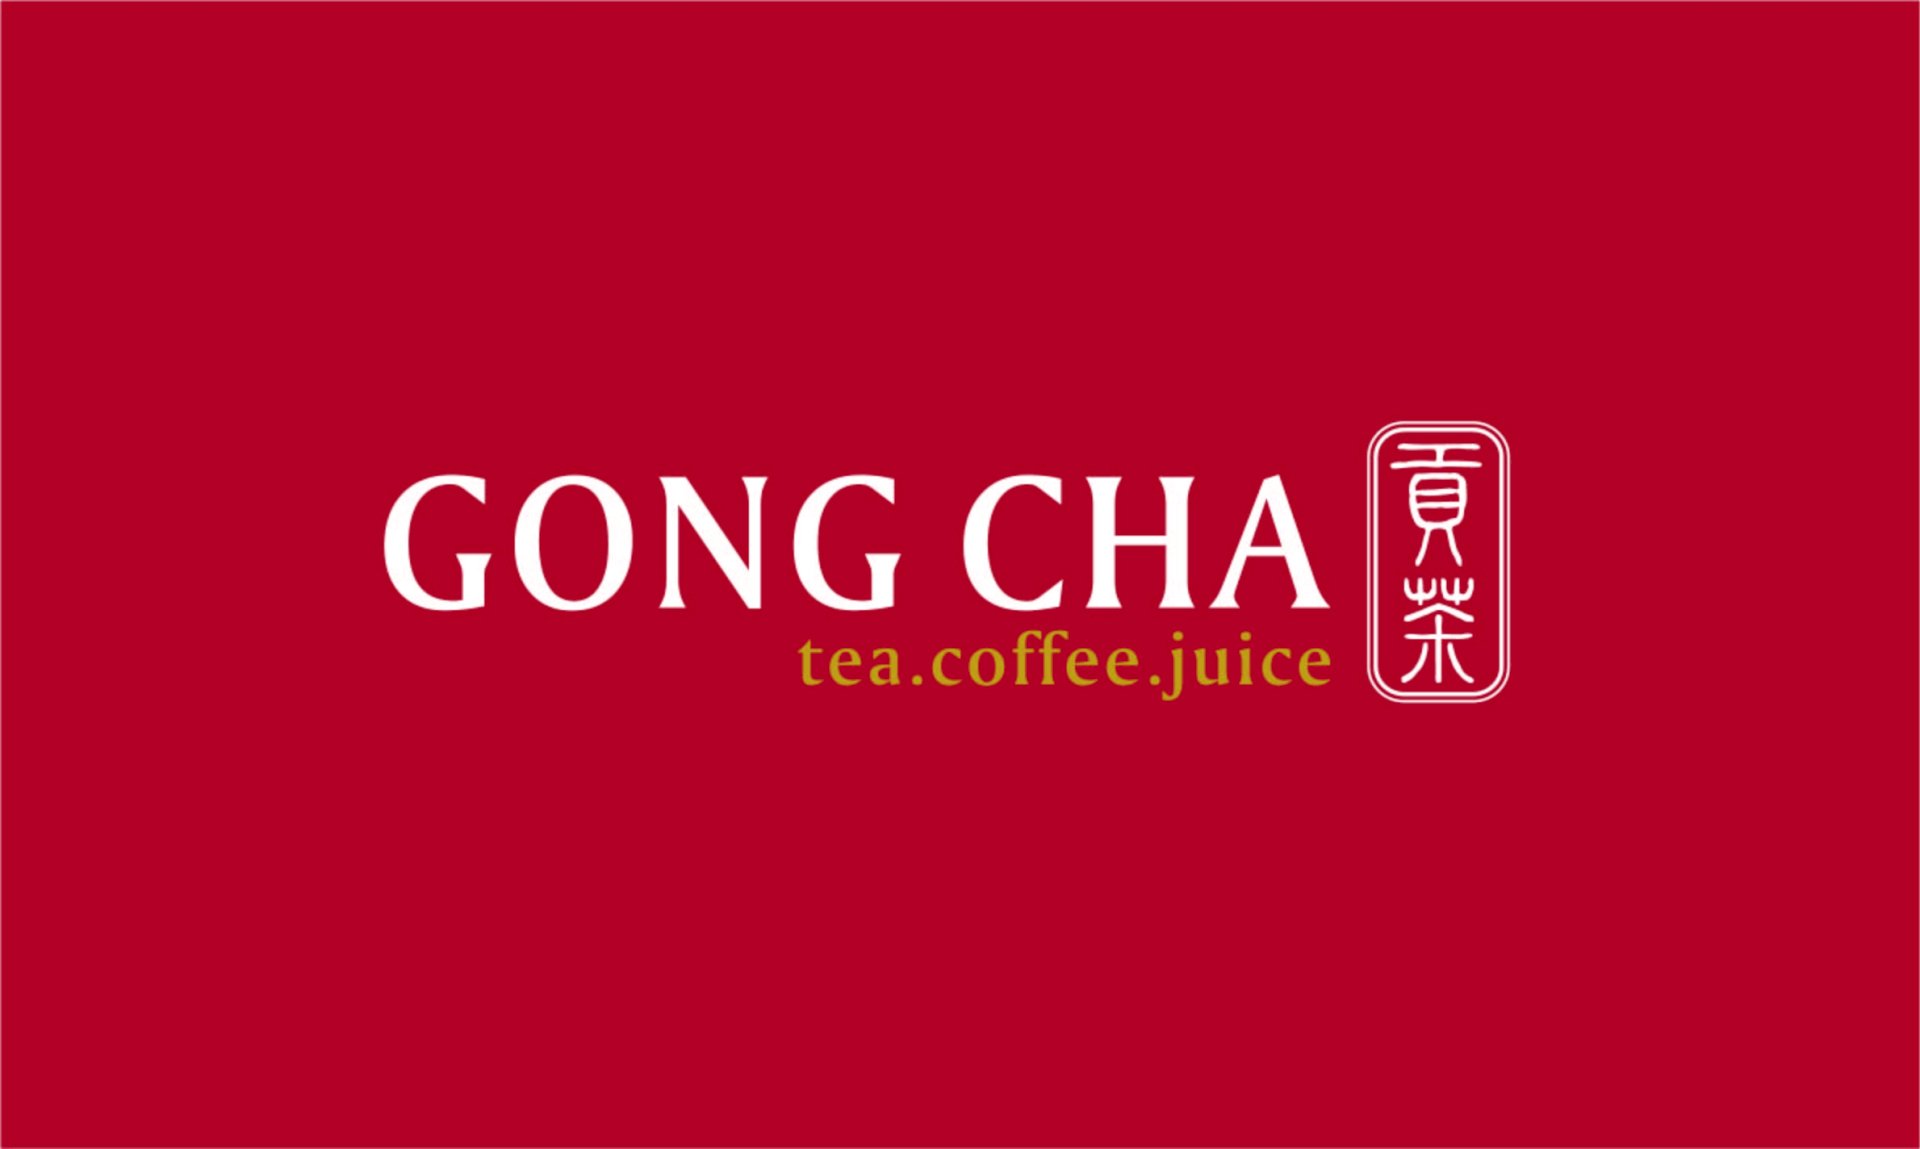 Tải mẫu logo Gong Cha file vector AI, EPS, JPEG, PNG, SVG